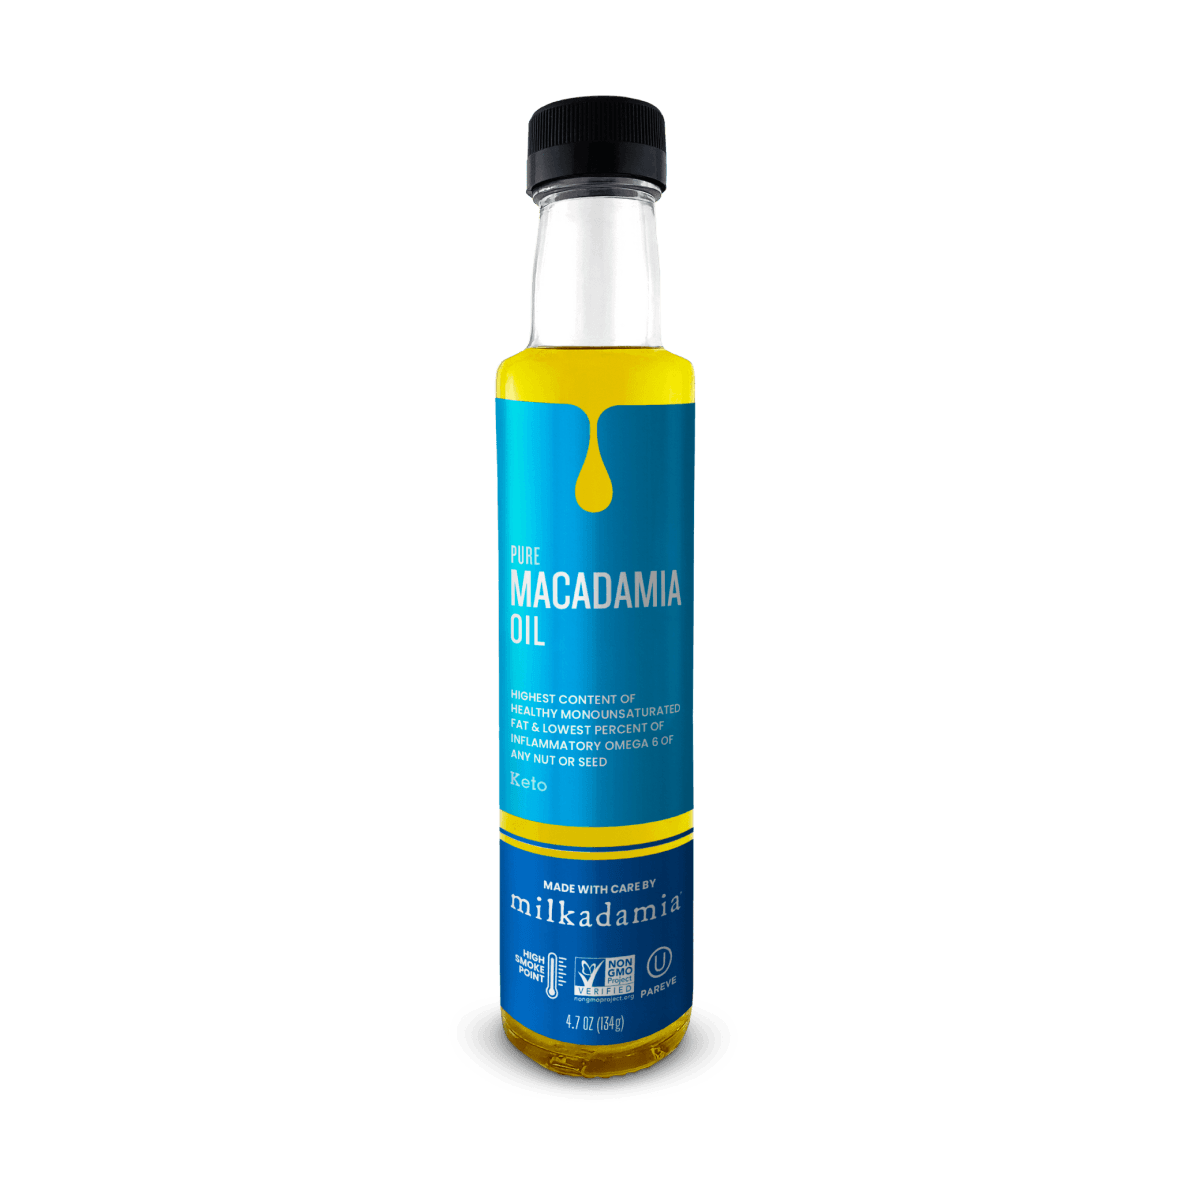 Pure Macadamia Oil